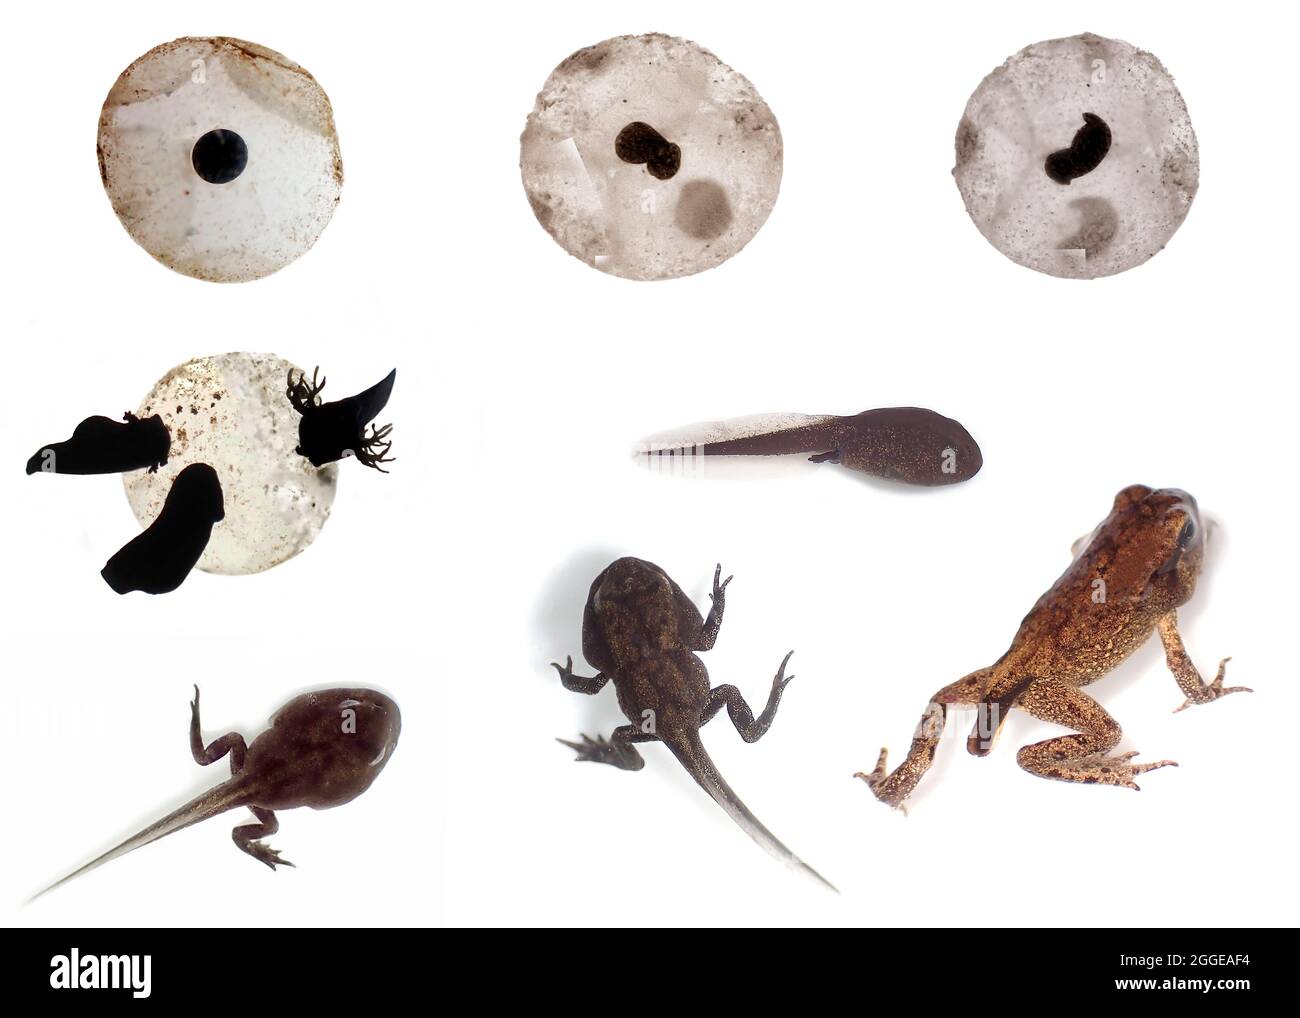 rana-comun-rana-temporaria-desarrollo-completo-de-huevo-de-rana-embrion-a-tadpolo-larva-a-rana-adulta-metamorfosis-transformacion-2ggeaf4.jpg